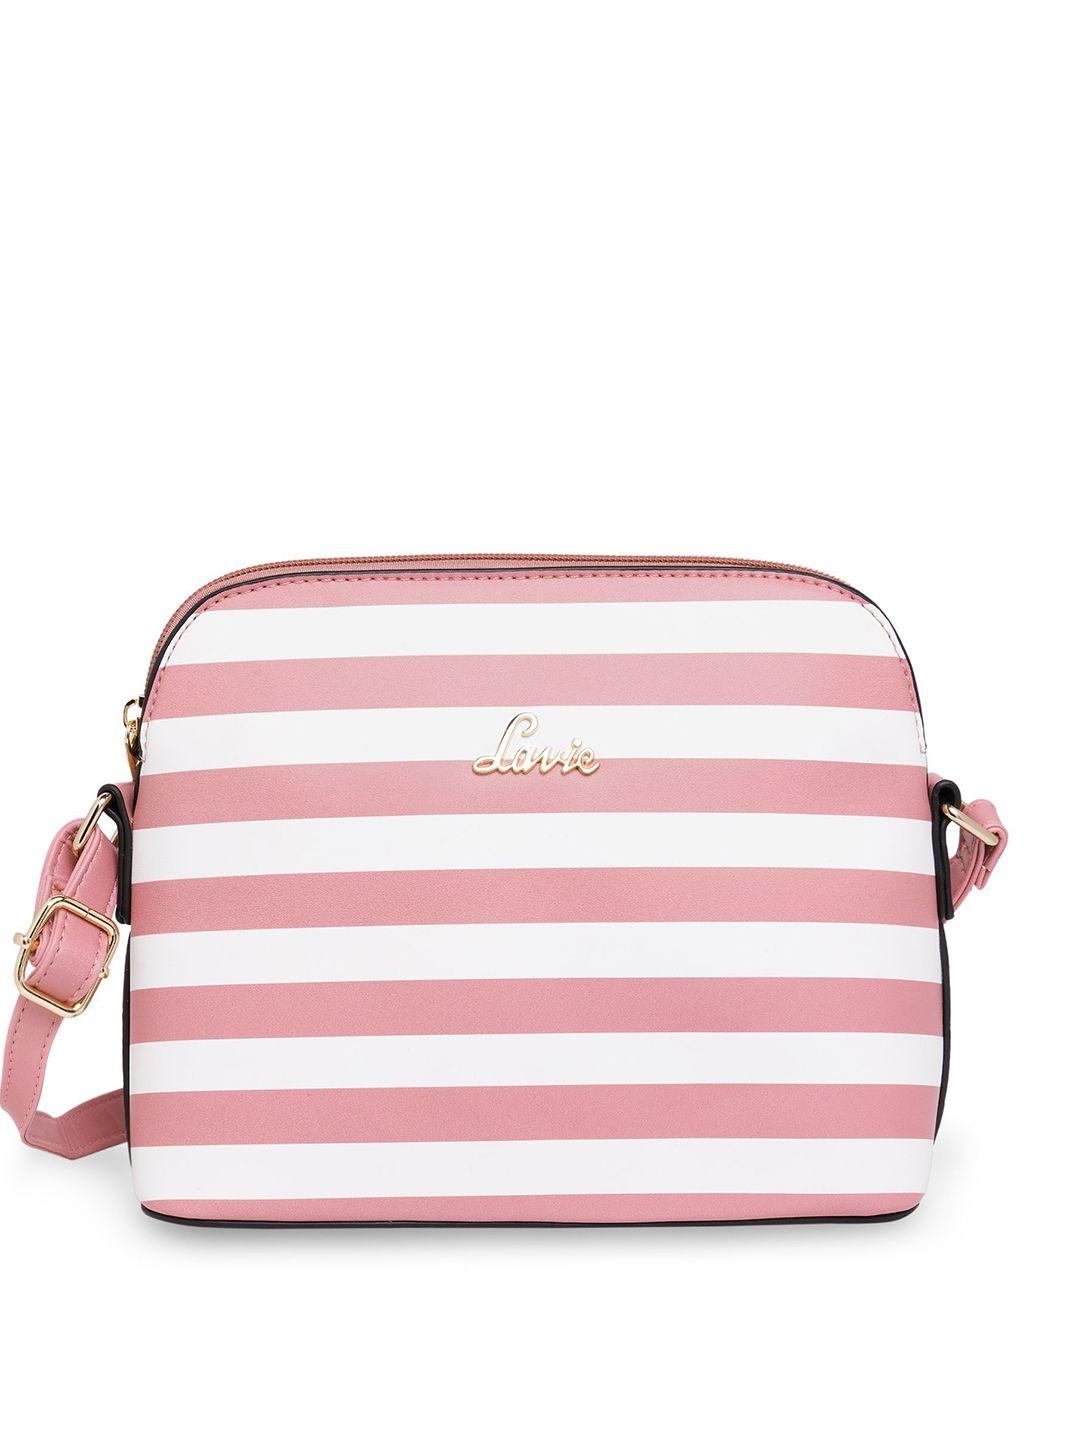 lavie moritz coral pink & off-white striped sling bag